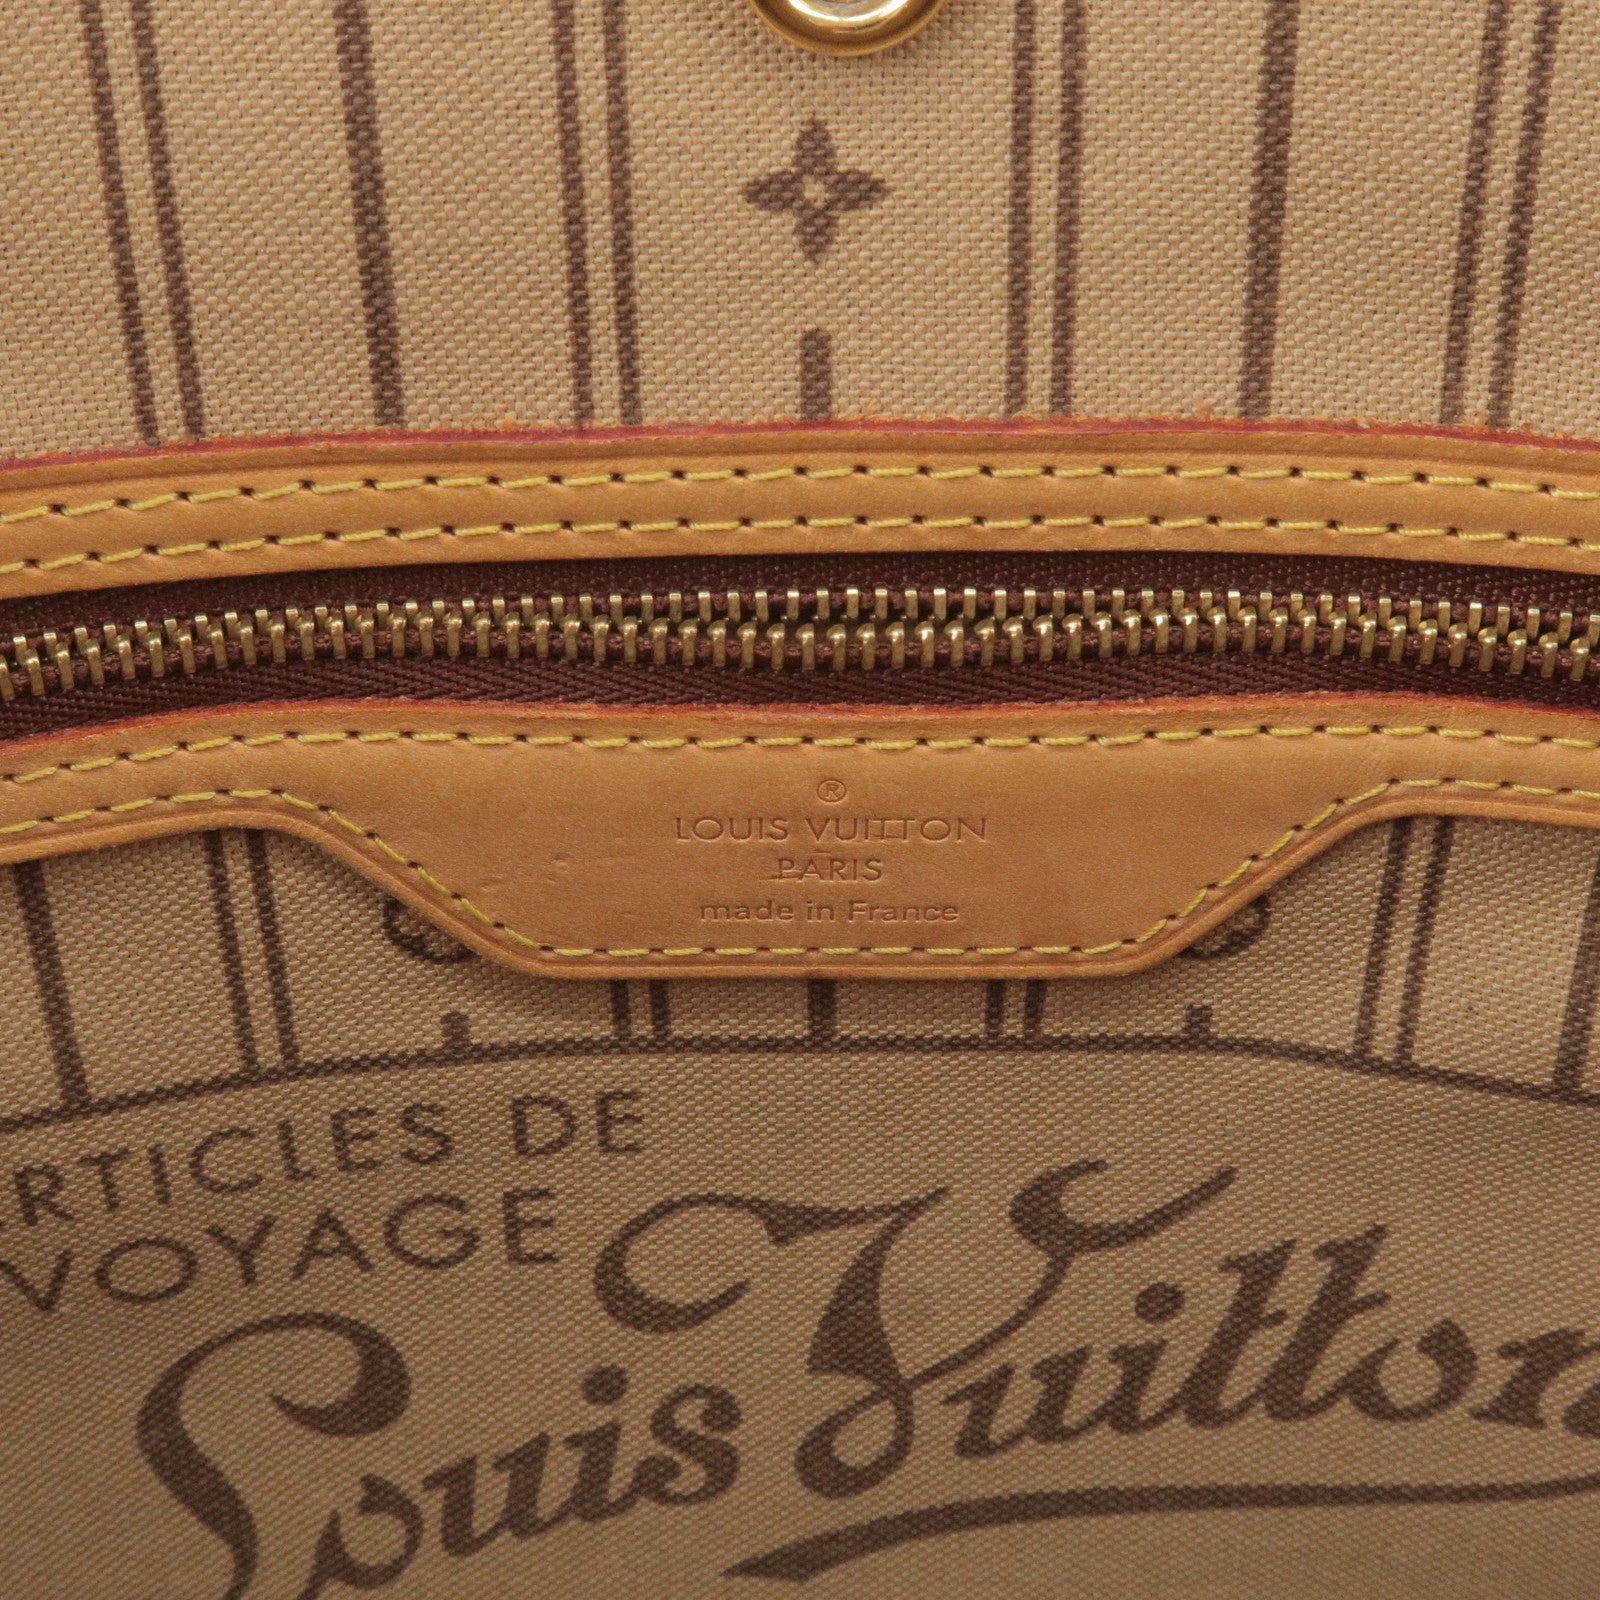 Louis Vuitton Articles De Voyage Monogram Tote